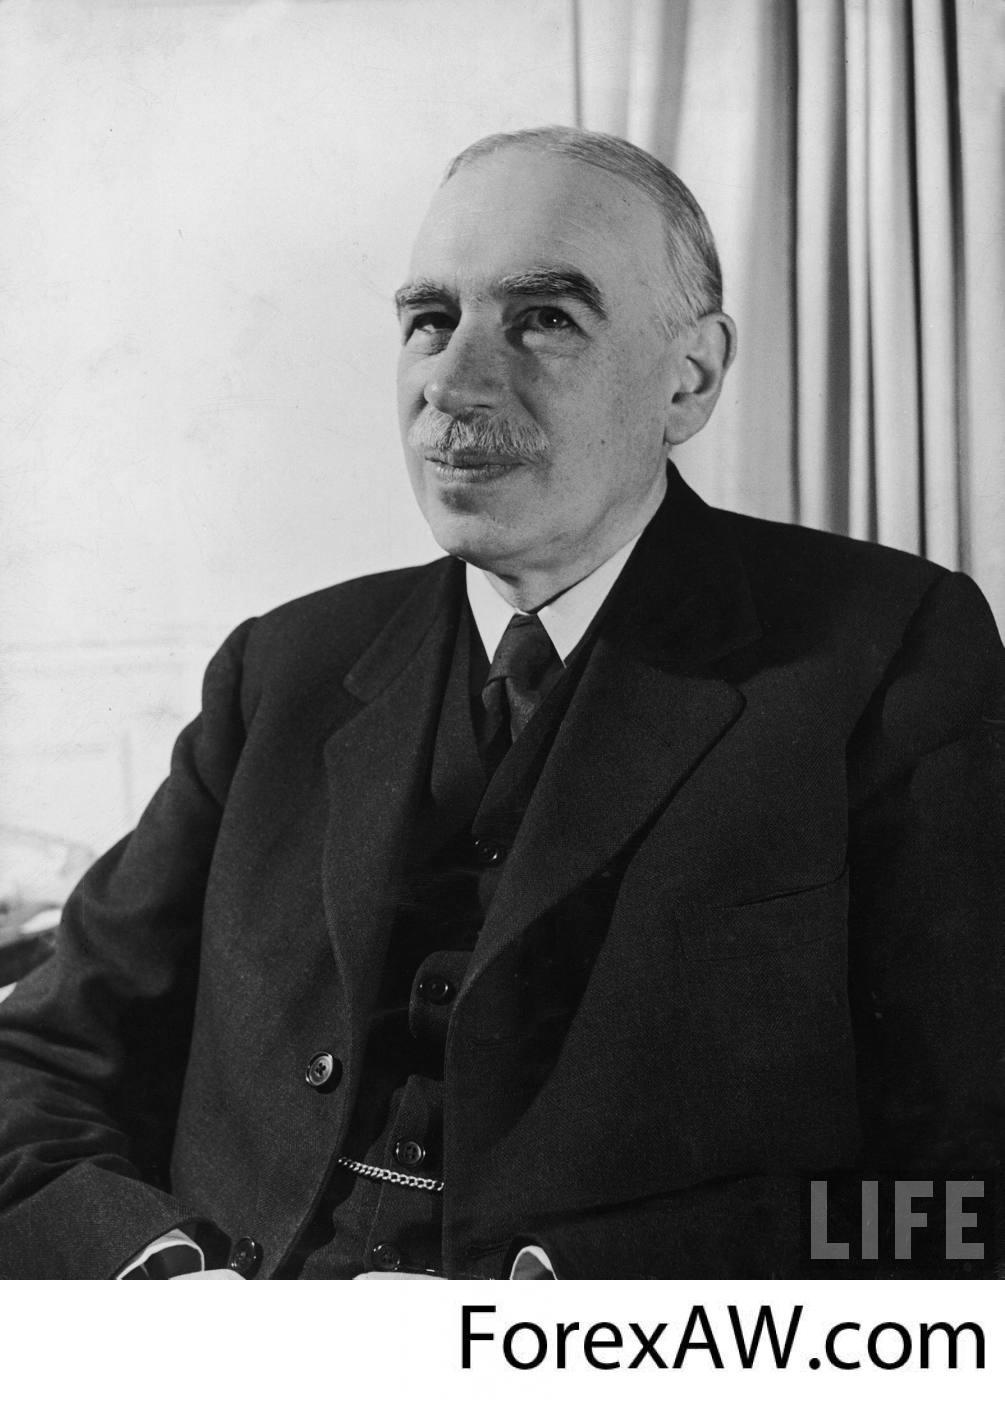 Дж кейнс. Джон Кейнс. Джон Кейнс (1883-1946). Джон Maynard Keynes. Экономист Джон Мейнард Кейнс.